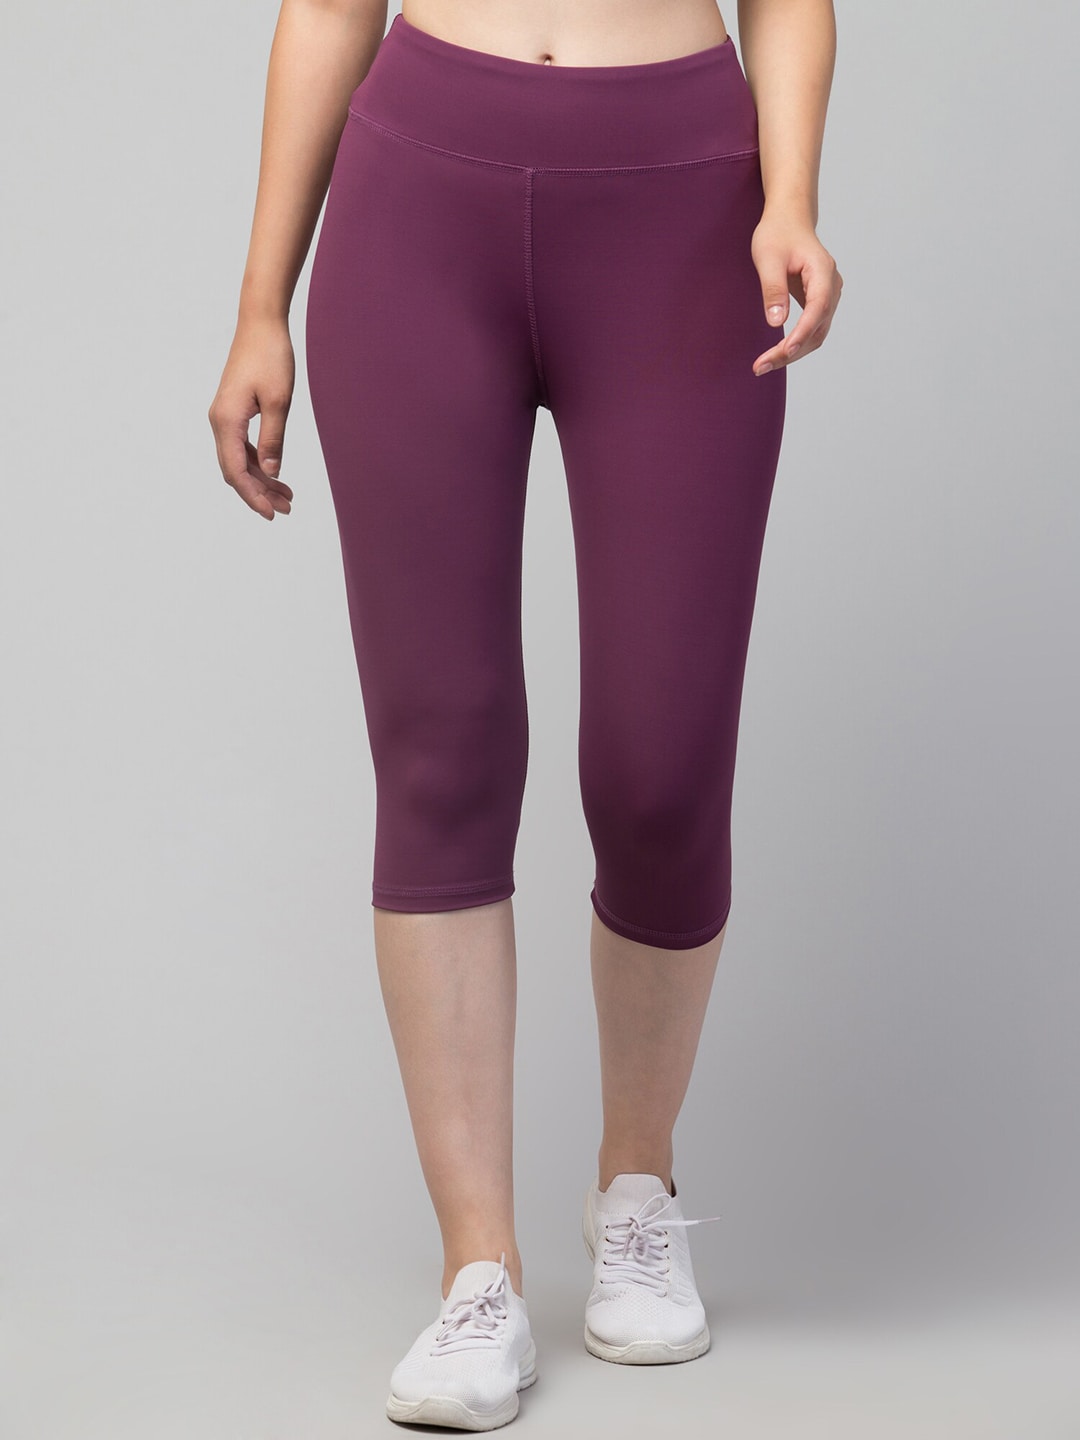 Apraa & Parma Women Purple Solid Dry Fit Yoga Capri Tights Price in India